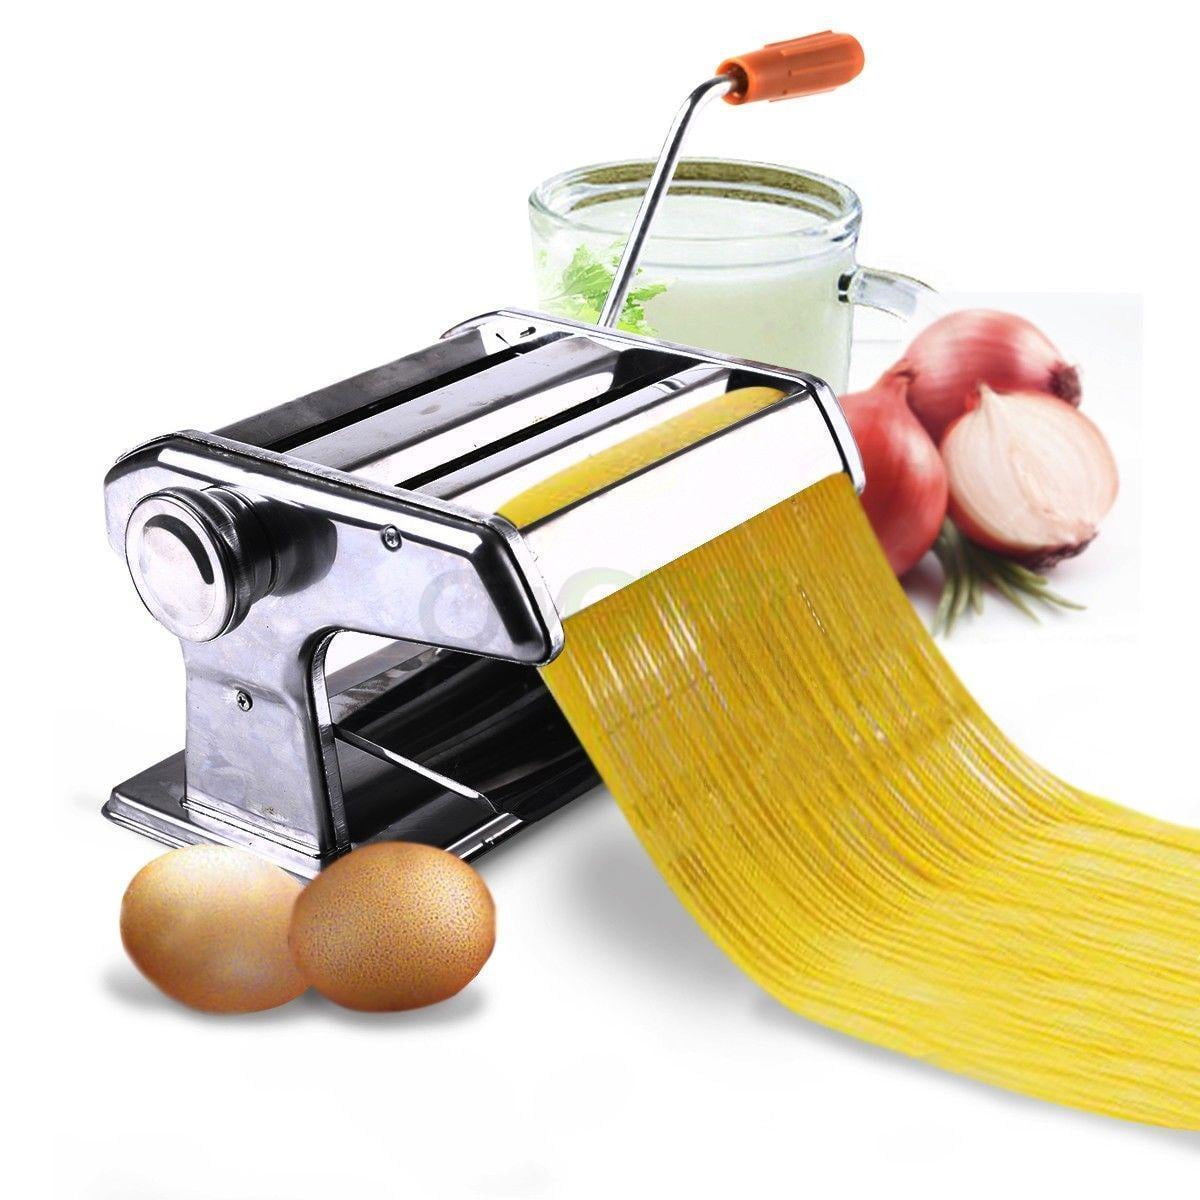 Uno Casa Pasta Maker - Pasta Roller Noodle Maker Machine